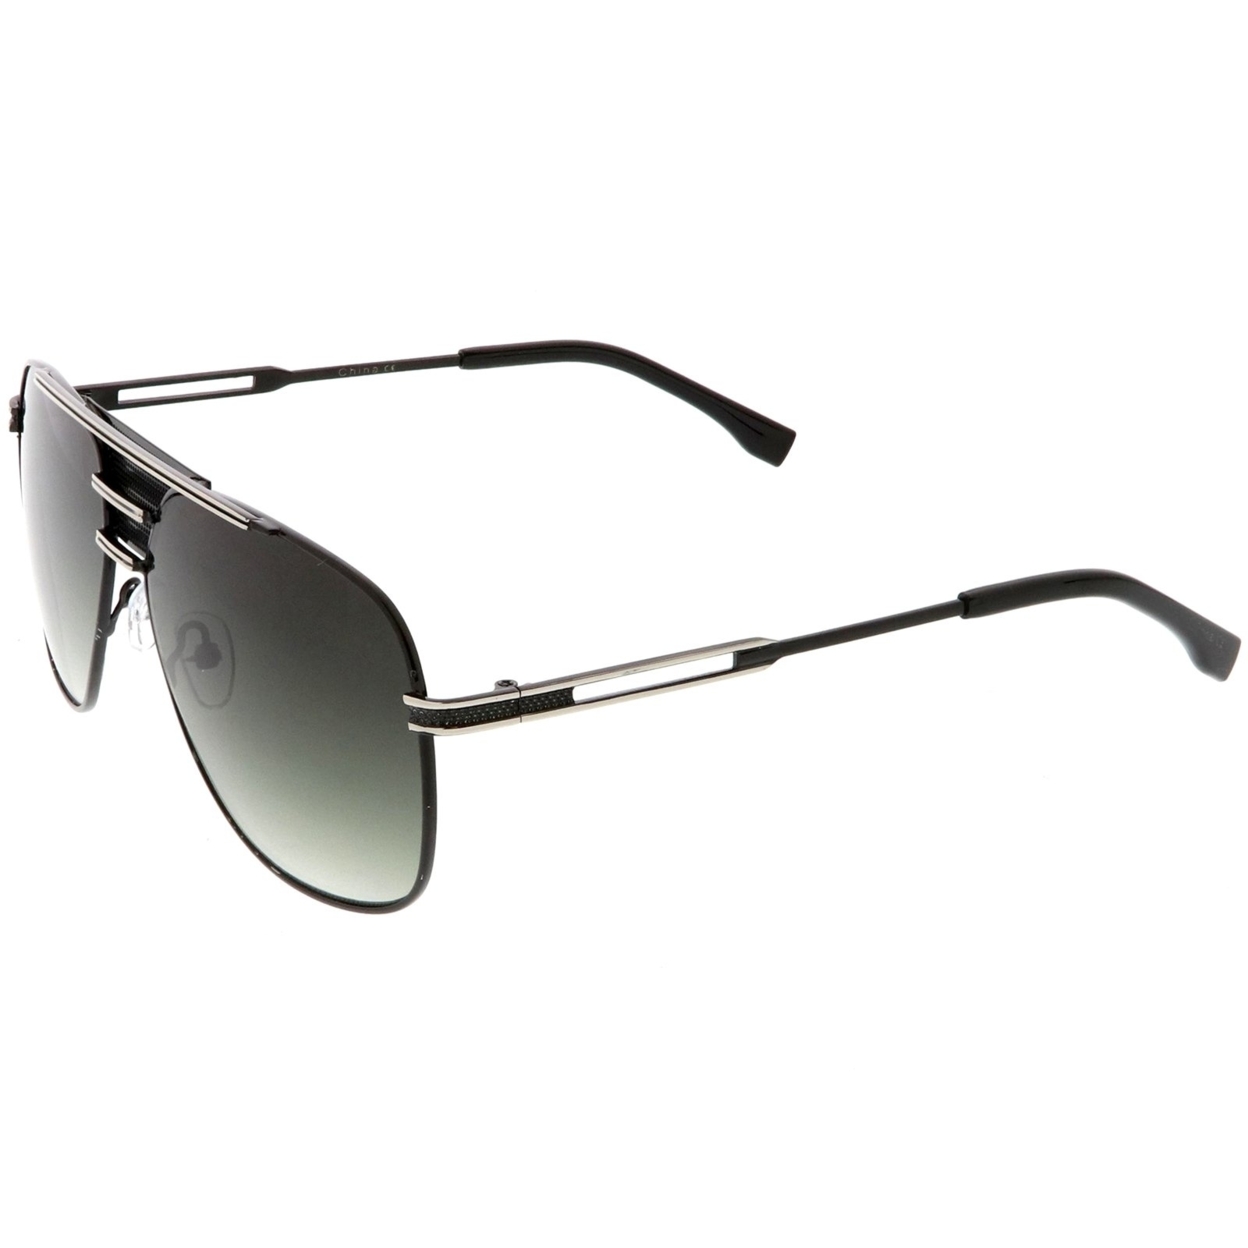 Oversized Aviator Sunglasses Perforated Triple Crossbar Square Lens 60mm - Black Black / Smoke